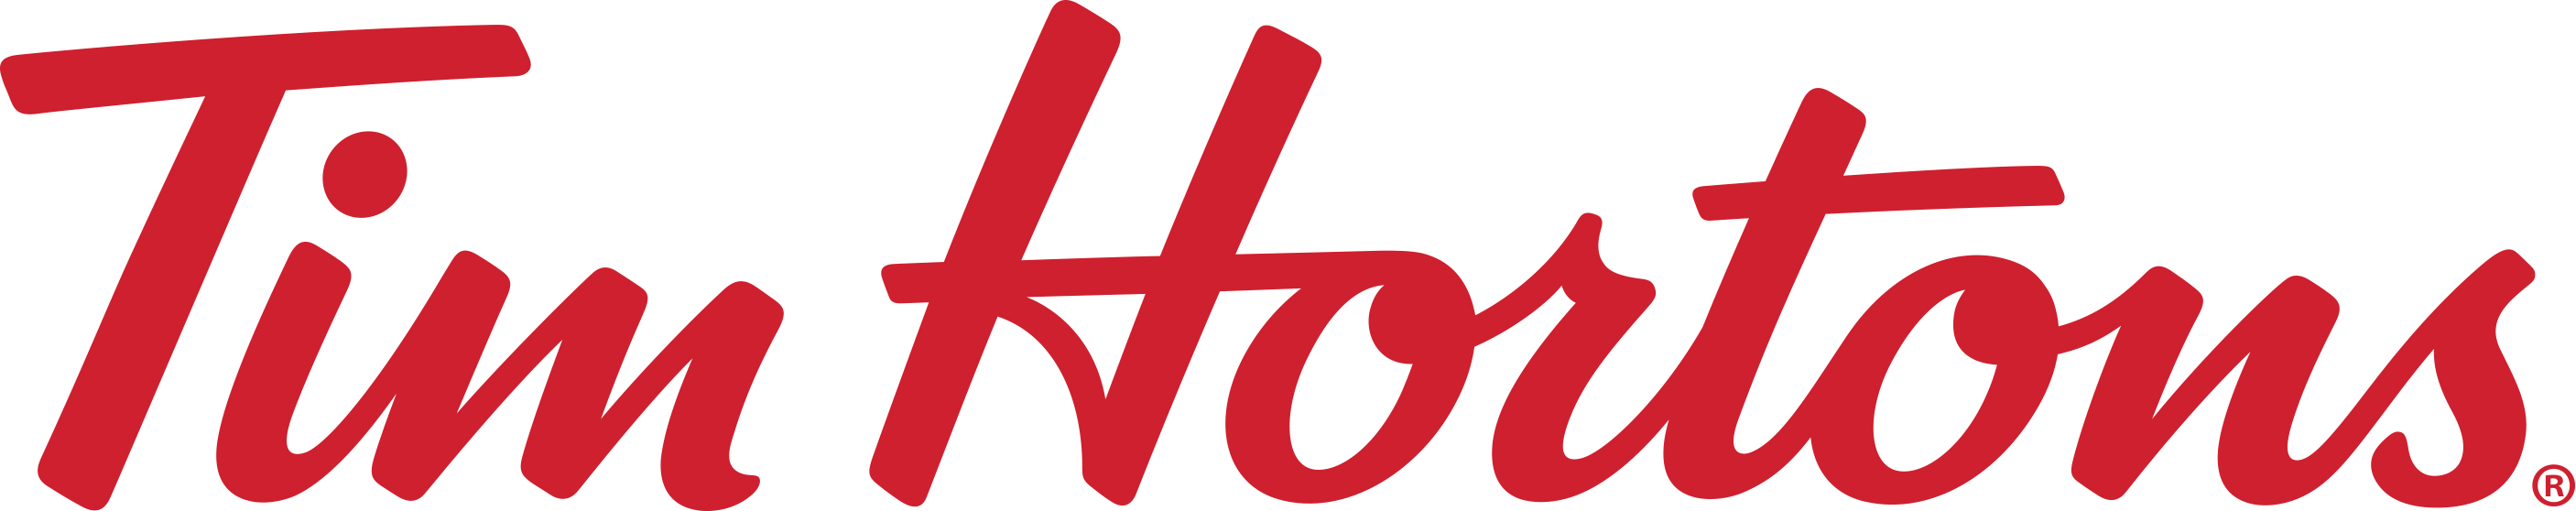 Tim Hortonns Logo_Marche.jpg